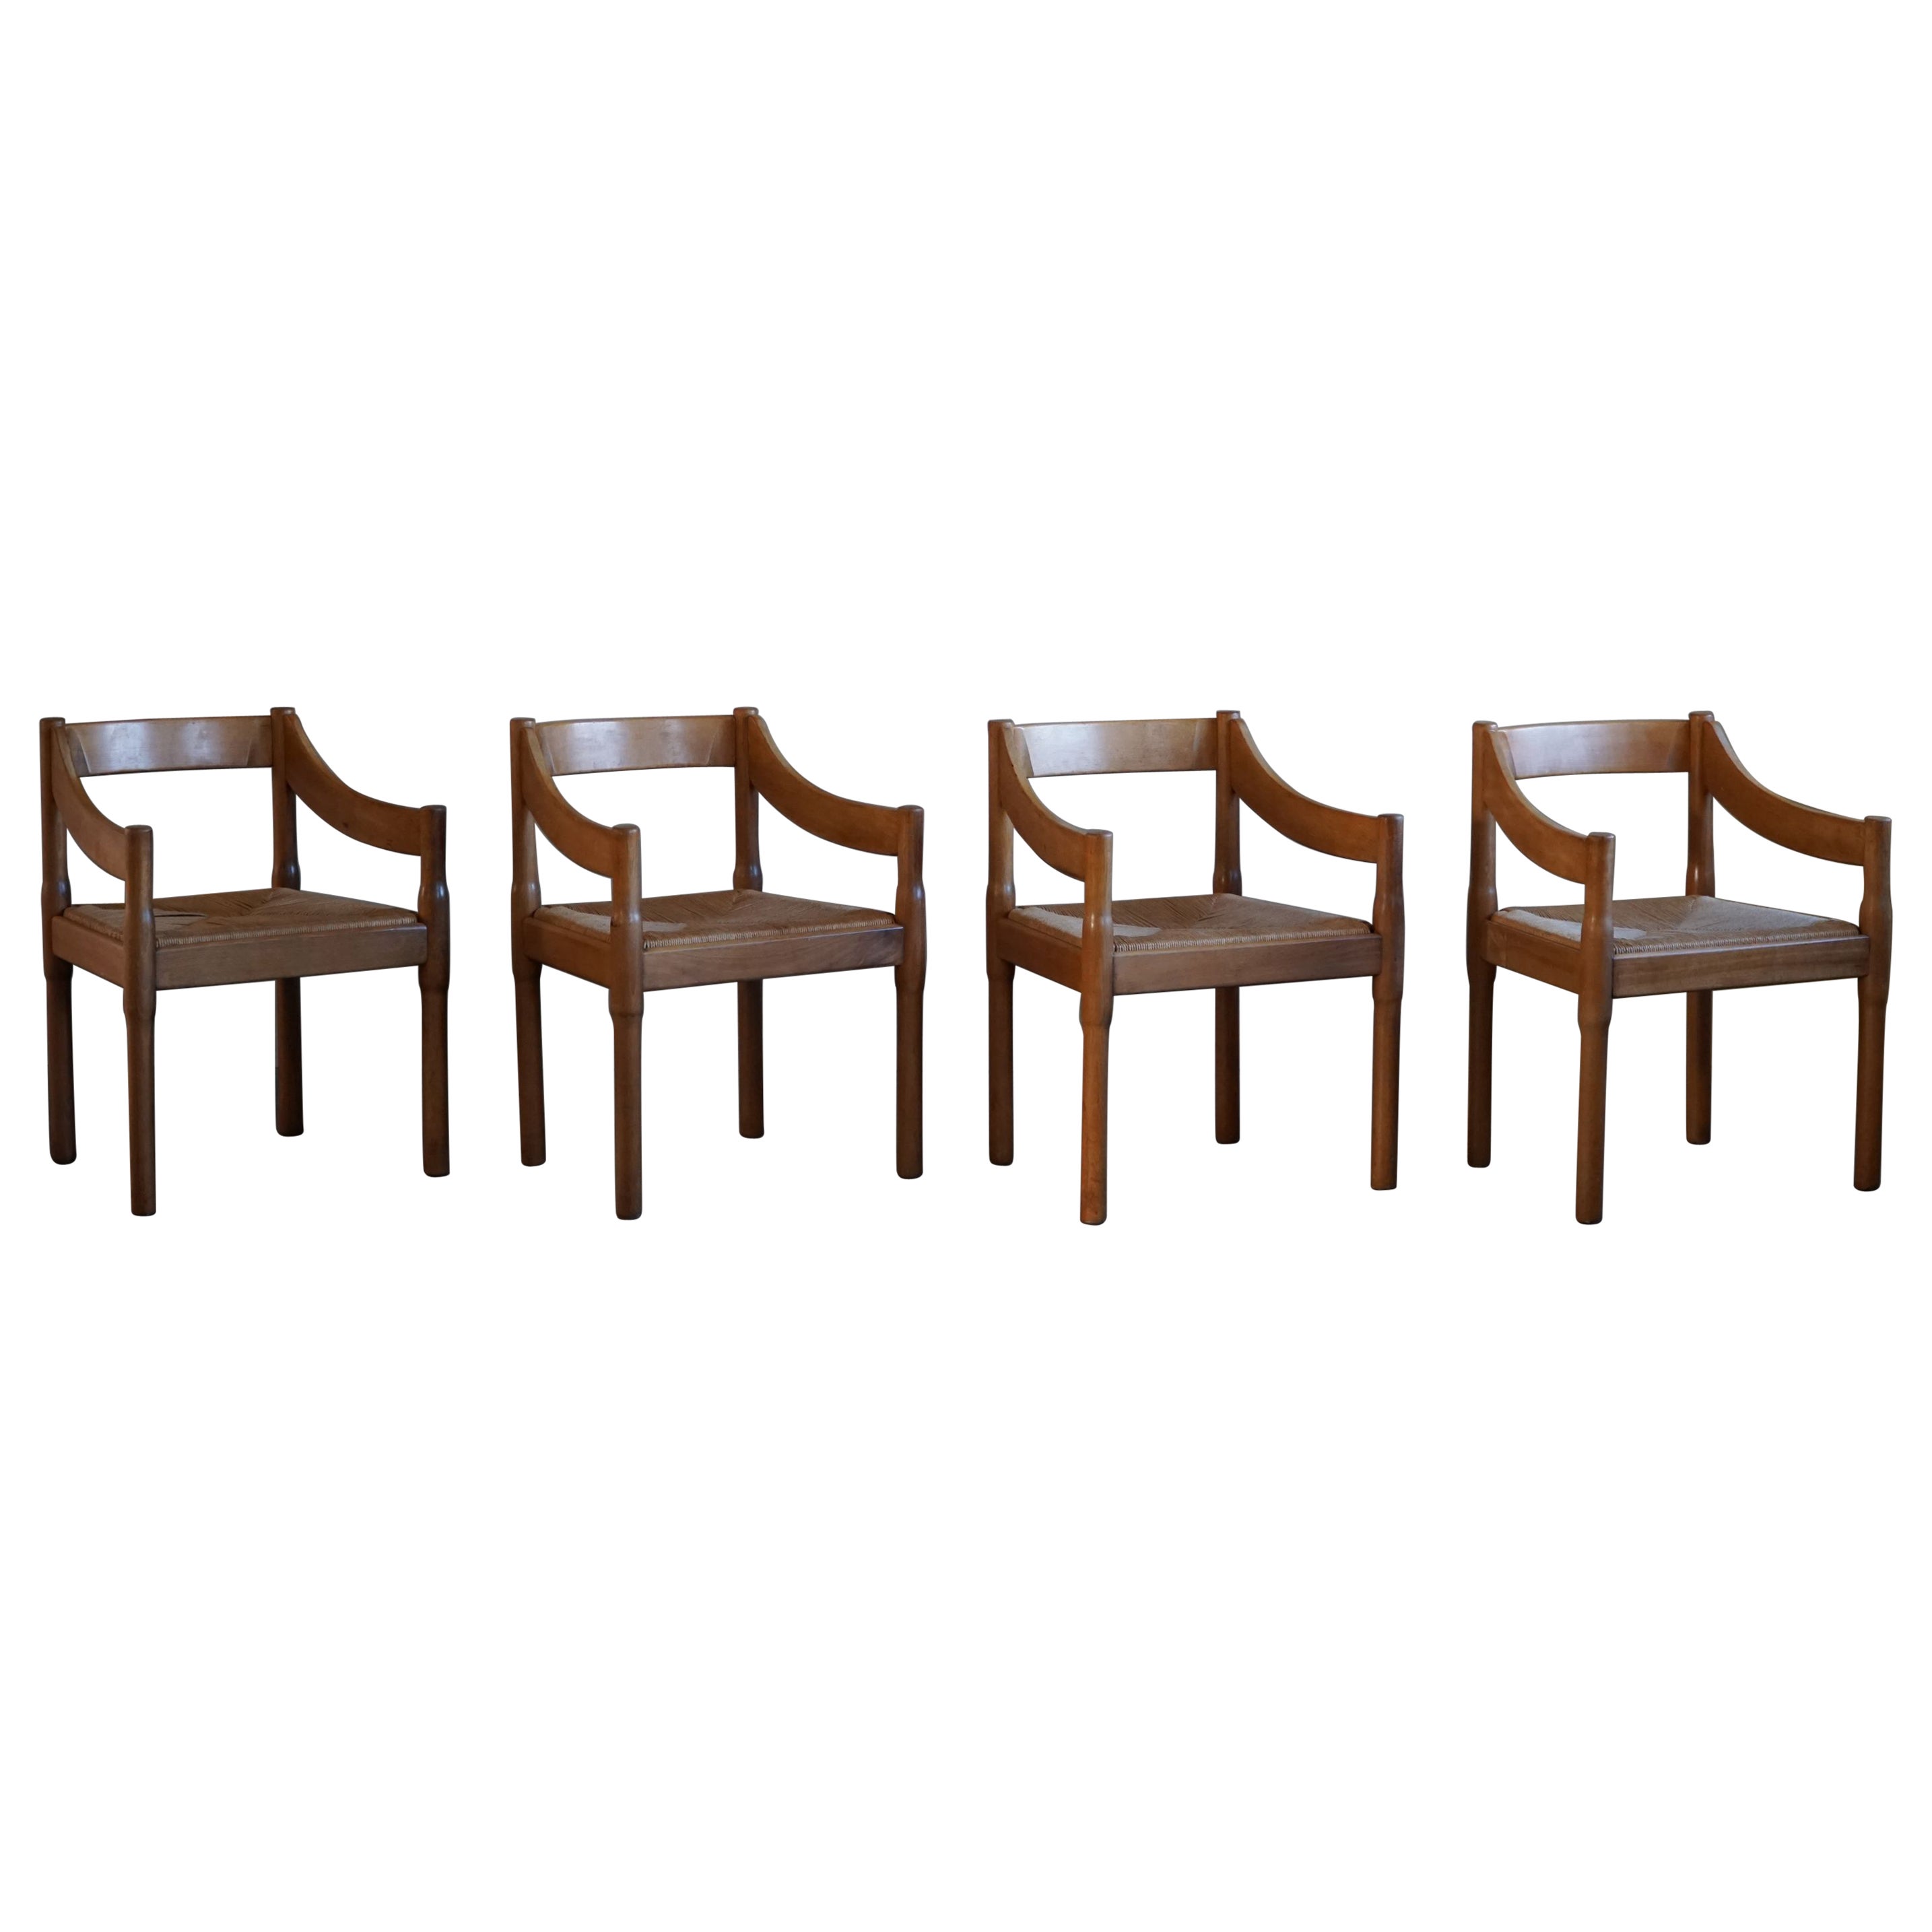 Vico Magistretti, Set of 4 "Carimate" Chairs for Cassina, Italian Modern, 1970s